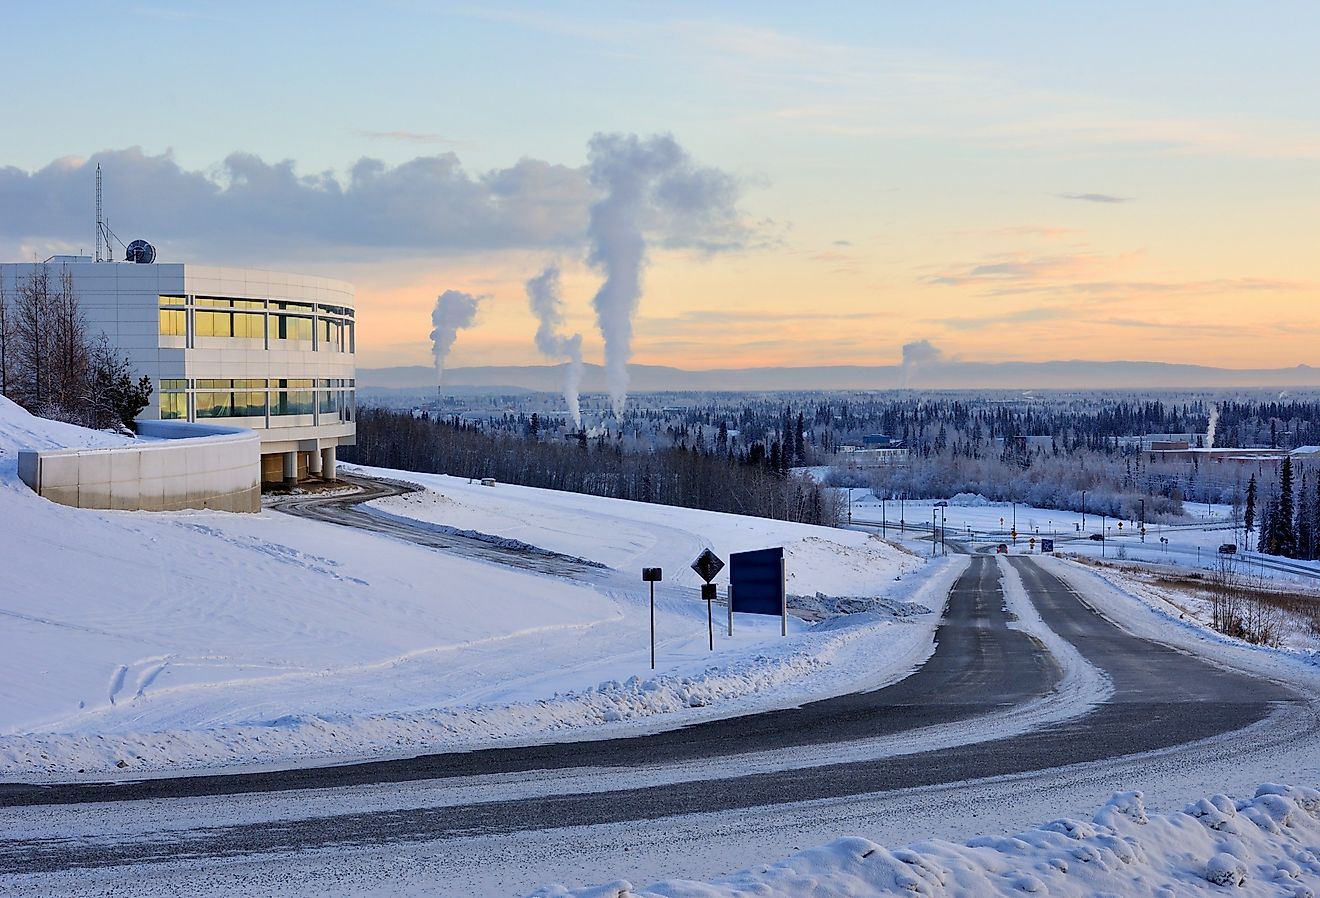 University of Alaska, Fairbanks, in winter at sunset. Image credit Gary Whitton via AdobeStock.